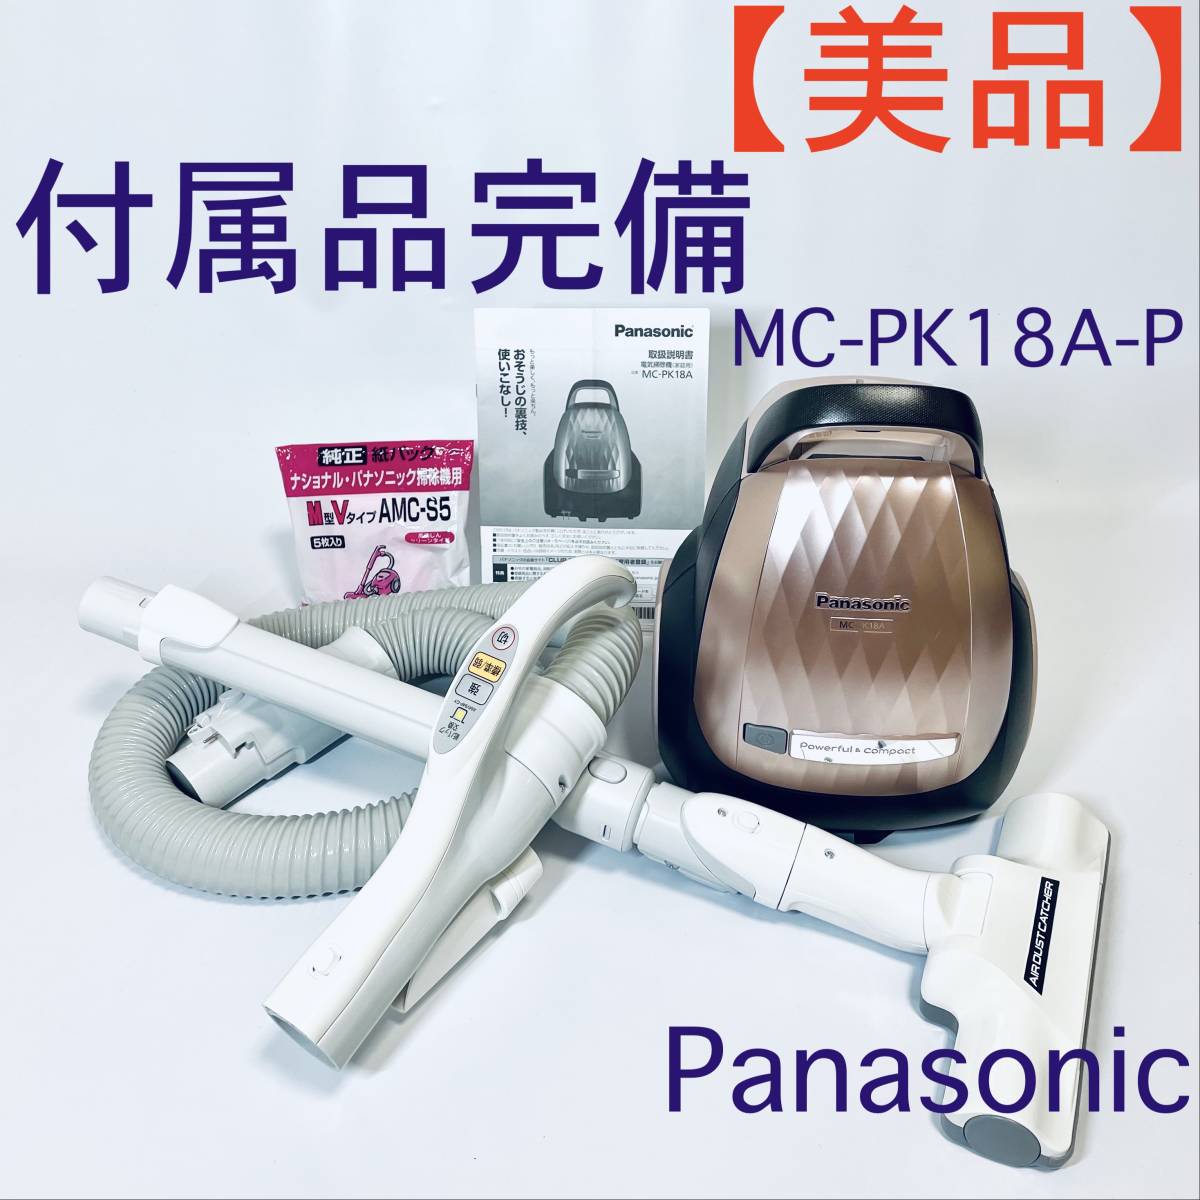 Panasonic 掃除機 説明書あり - 掃除機